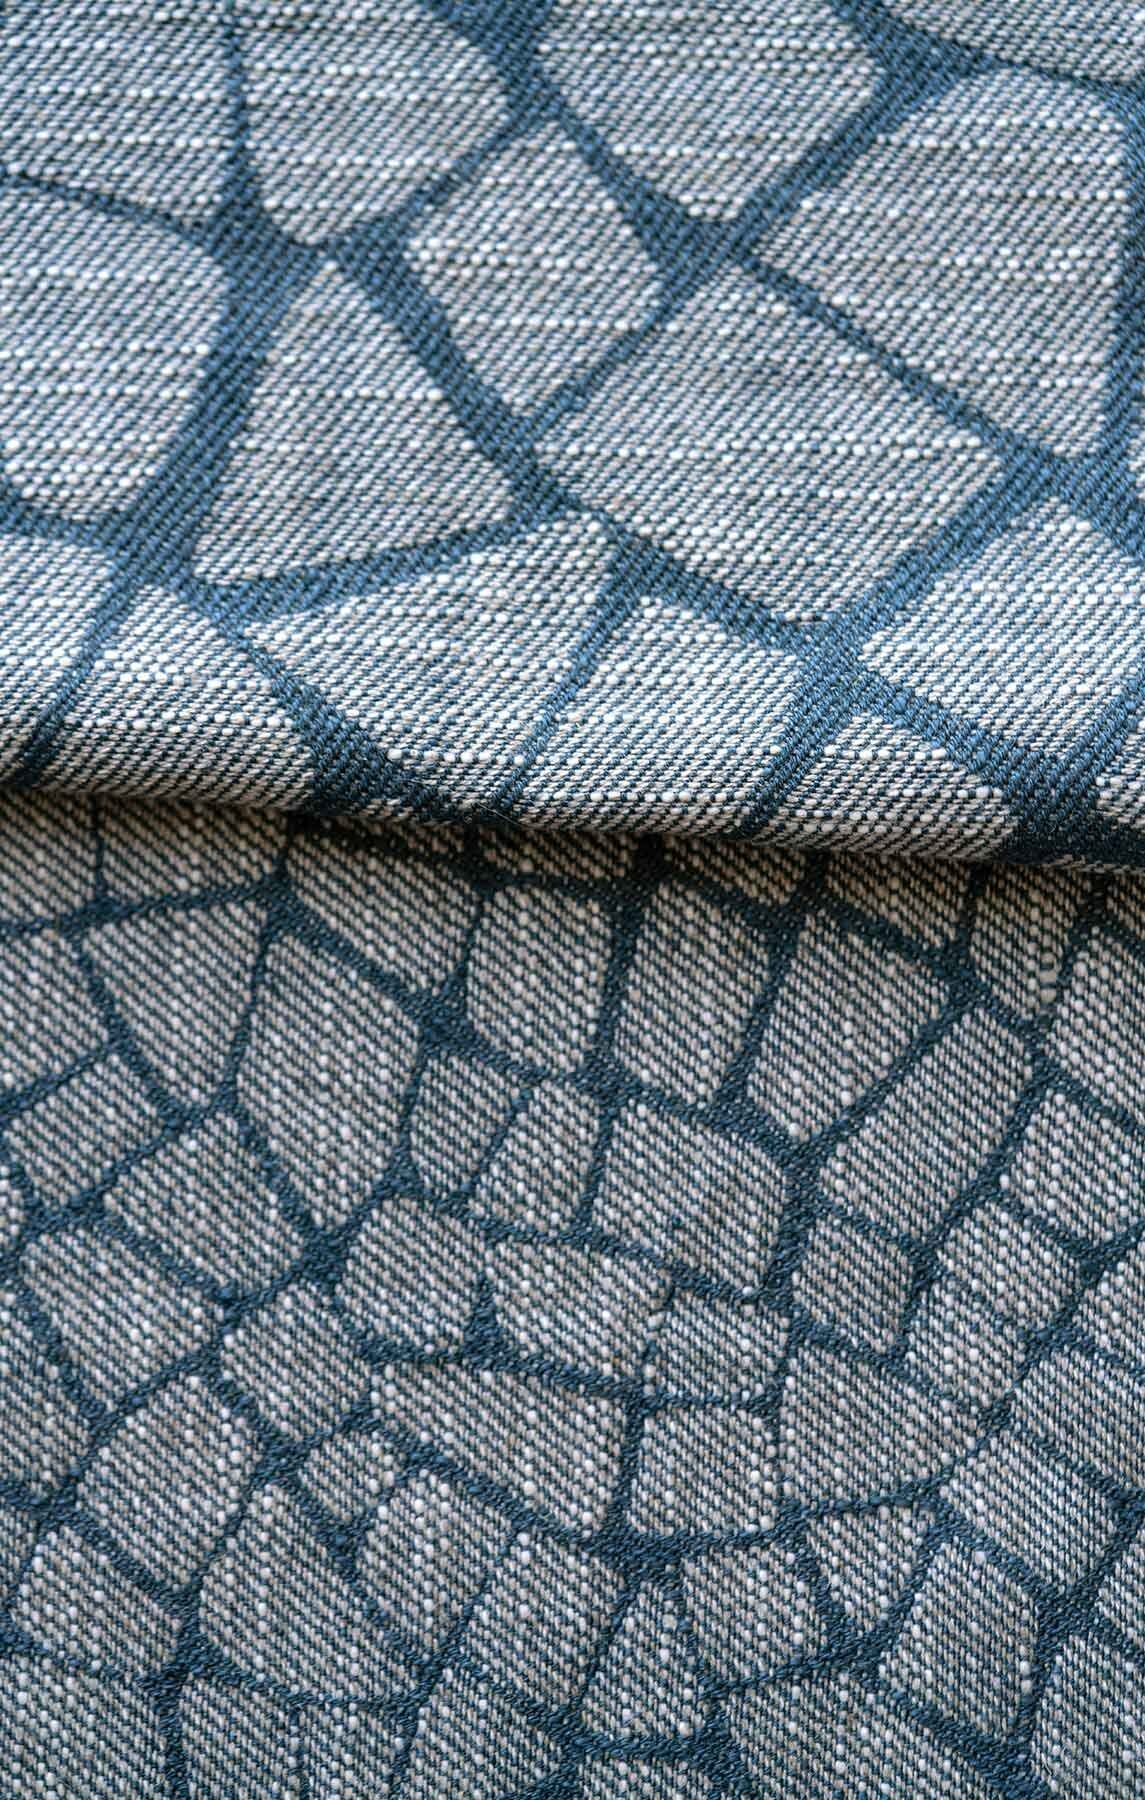 Scuba Crepe Fabric Grey 150cm - Abakhan